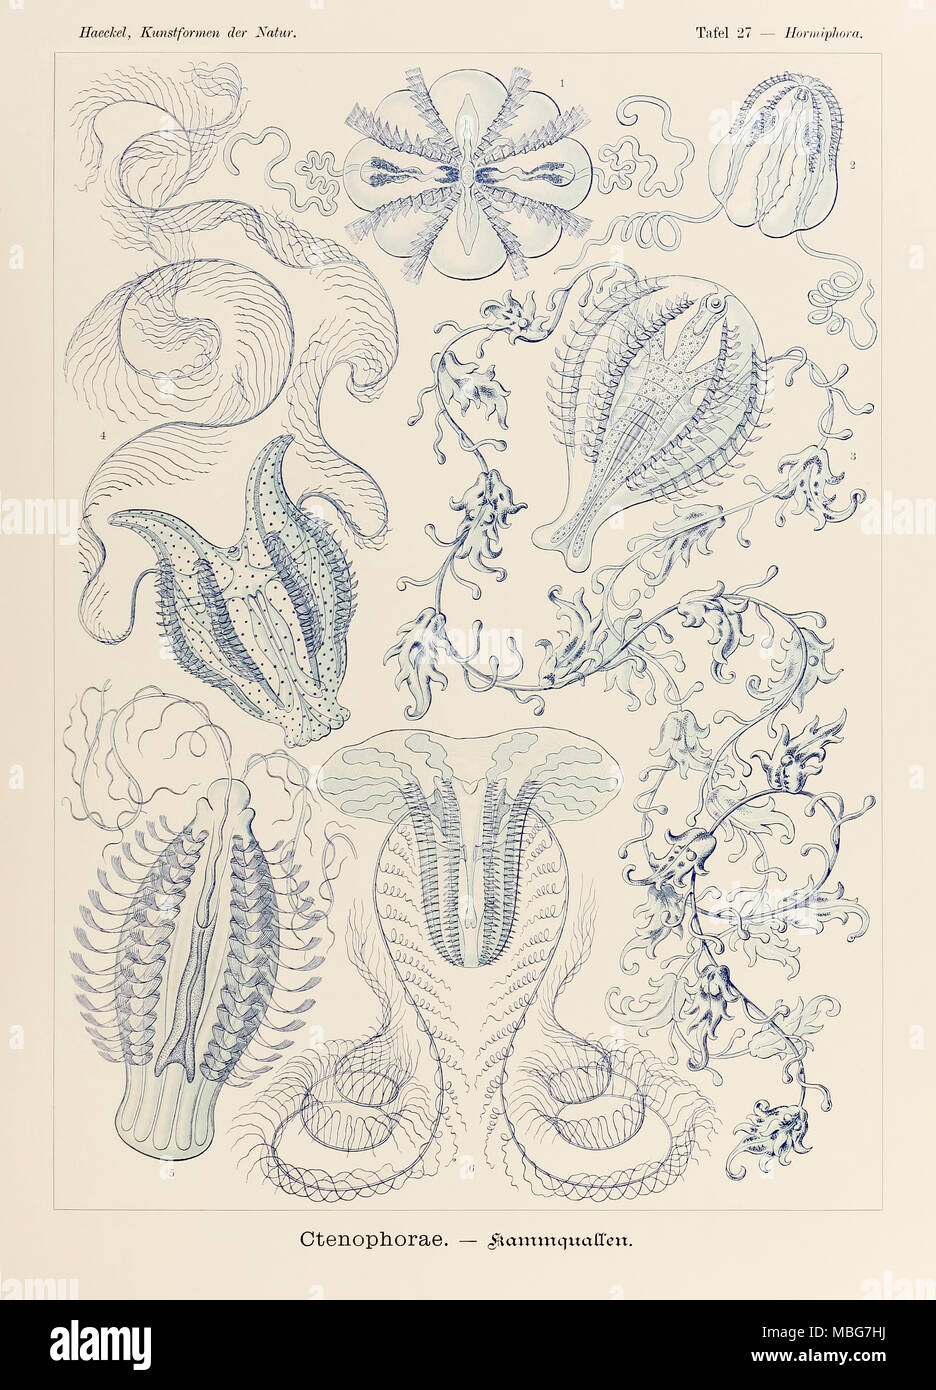 Plate 27 Hormiphora Ctenophorae from ‘Kunstformen der Natur’ (Art Forms in Nature) illustrated by Ernst Haeckel (1834-1919). See more information below. Stock Photo